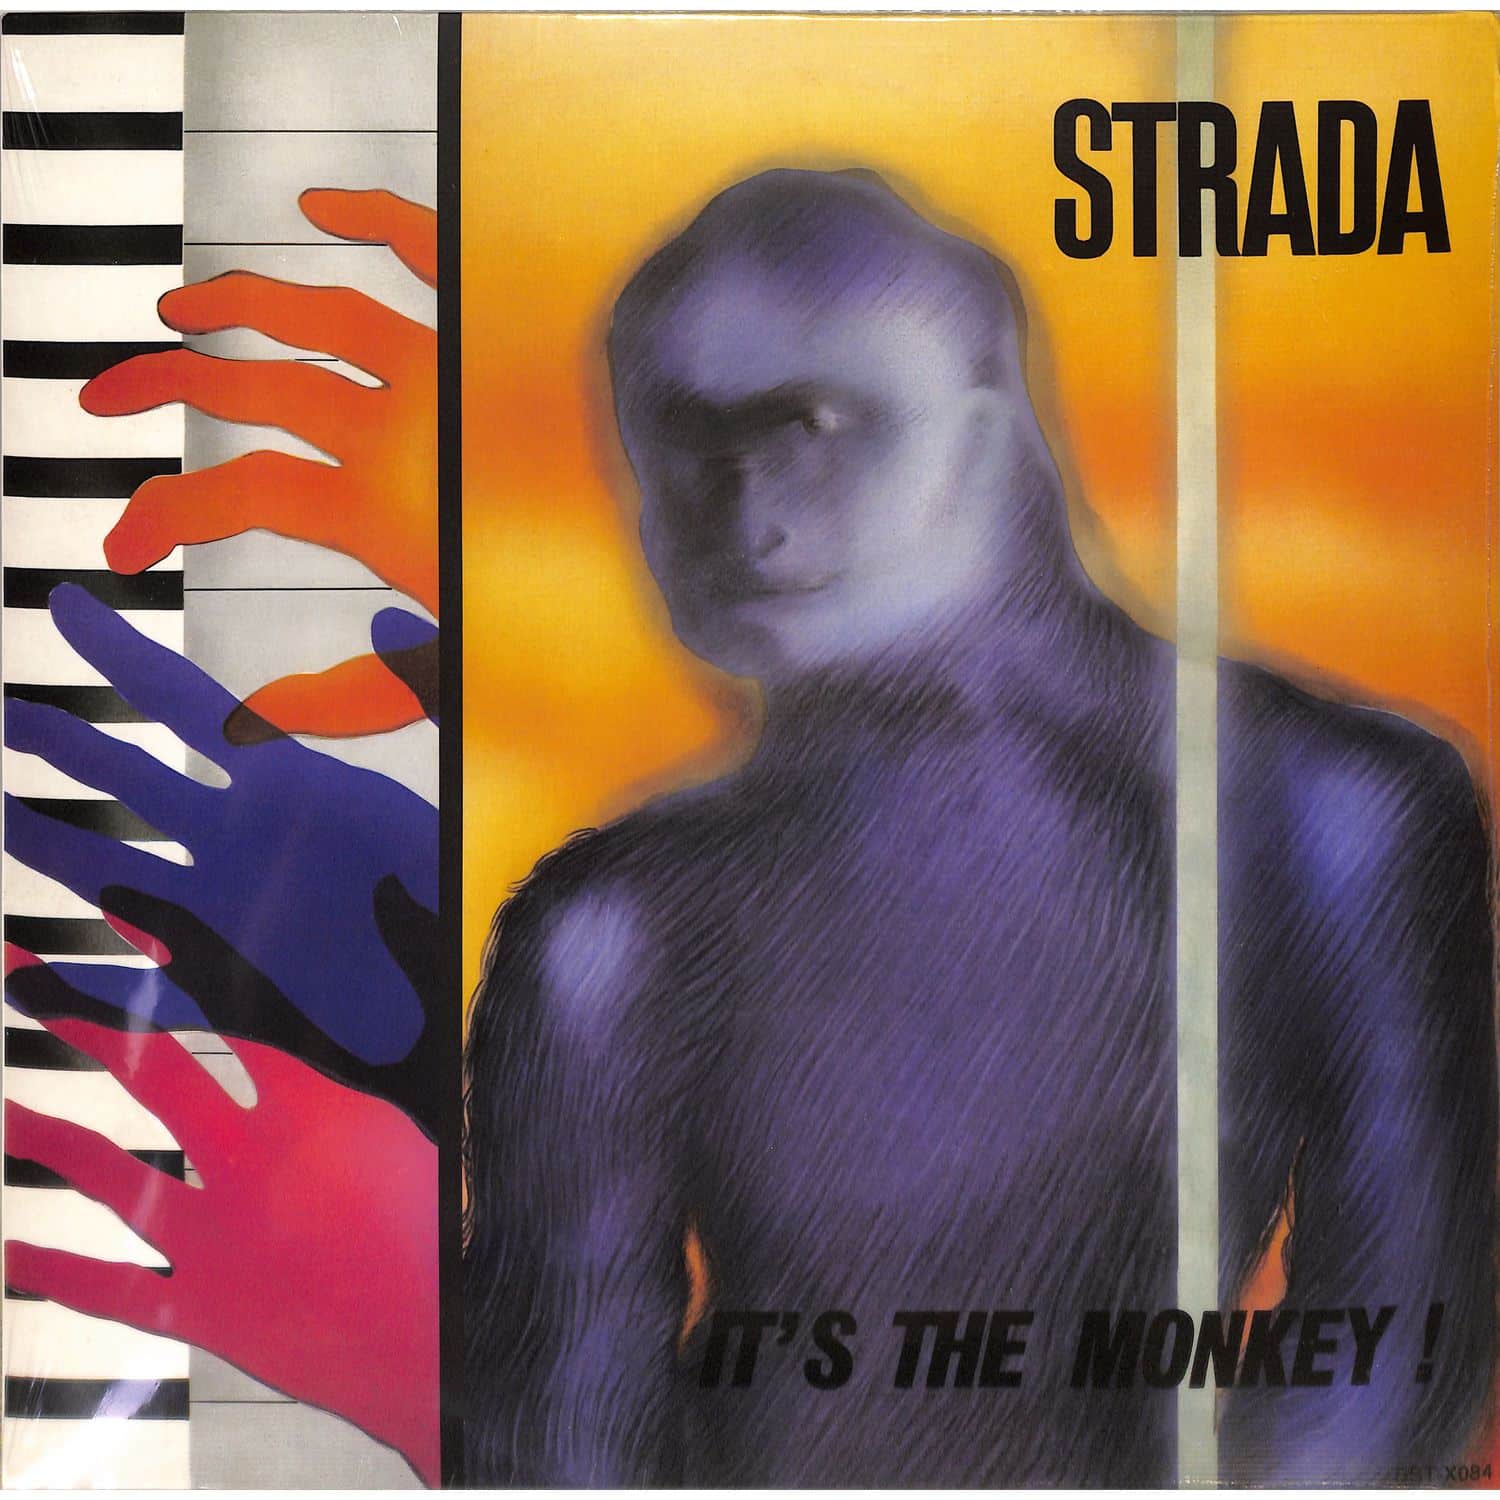 Strada - ITS THE MONKEY